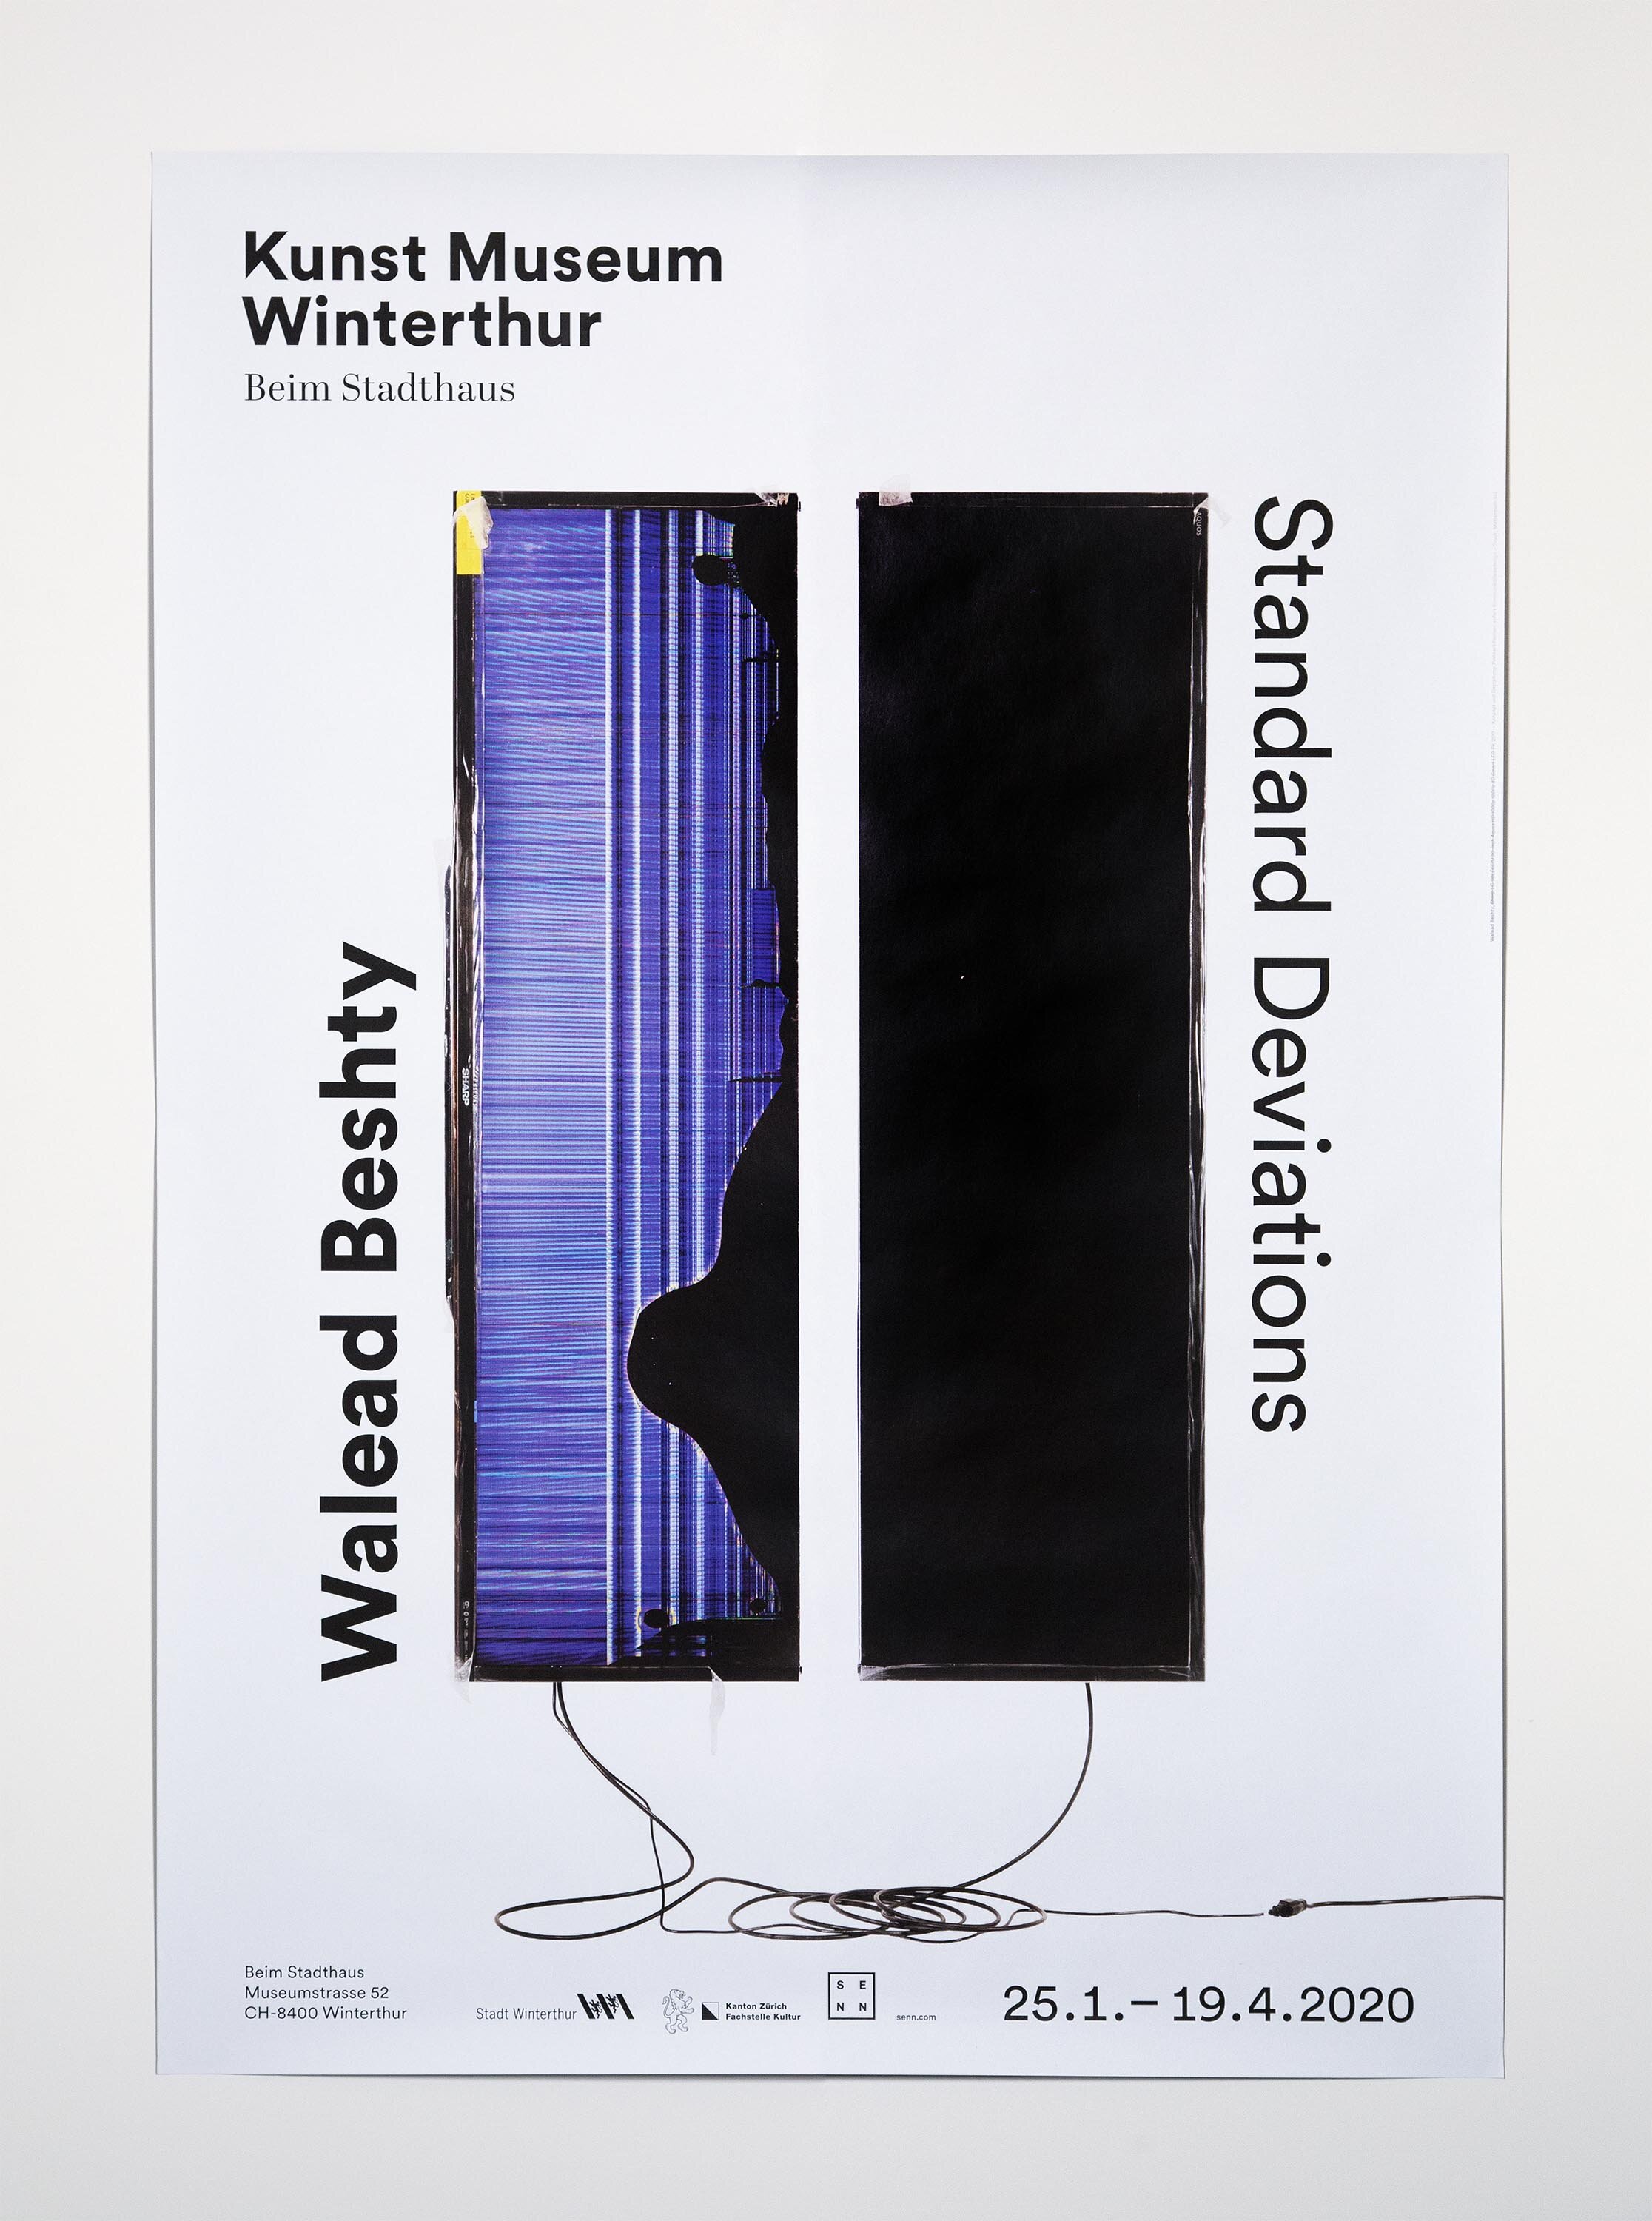   Standard Deviations  poster  Kunst Museum Winterthur, Switzerland  2020 